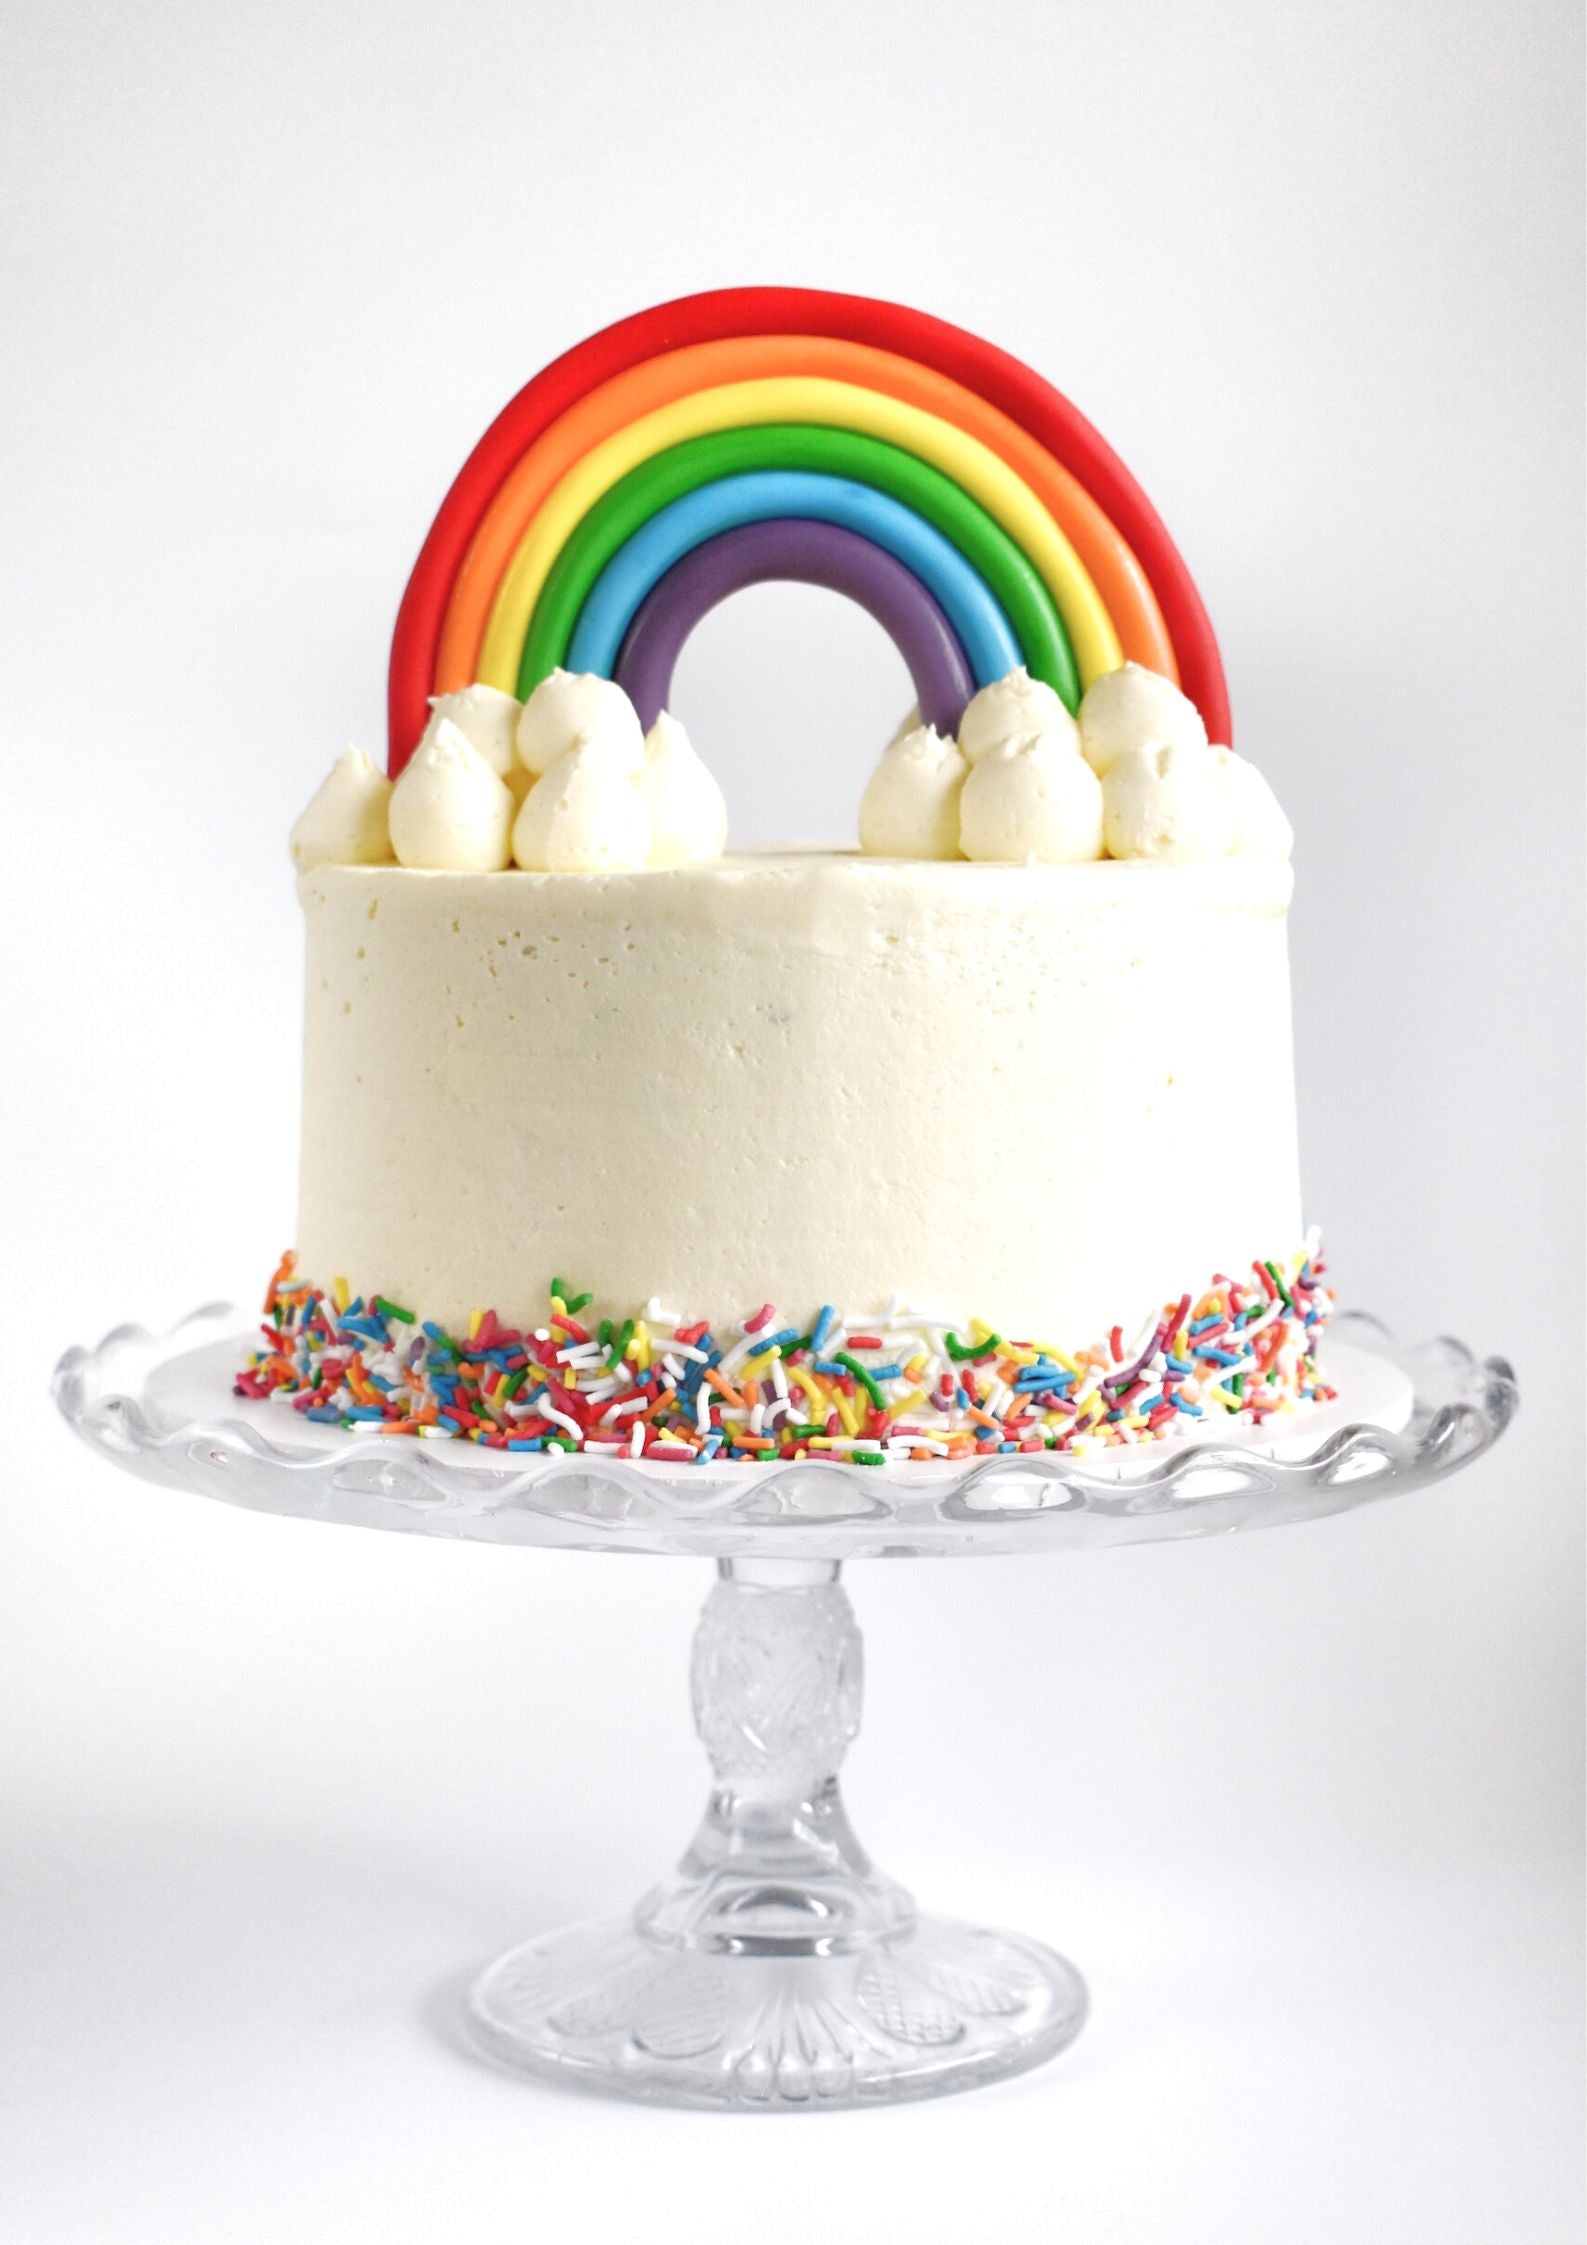 Rainbow Cake Design for Girl | Yummy cake